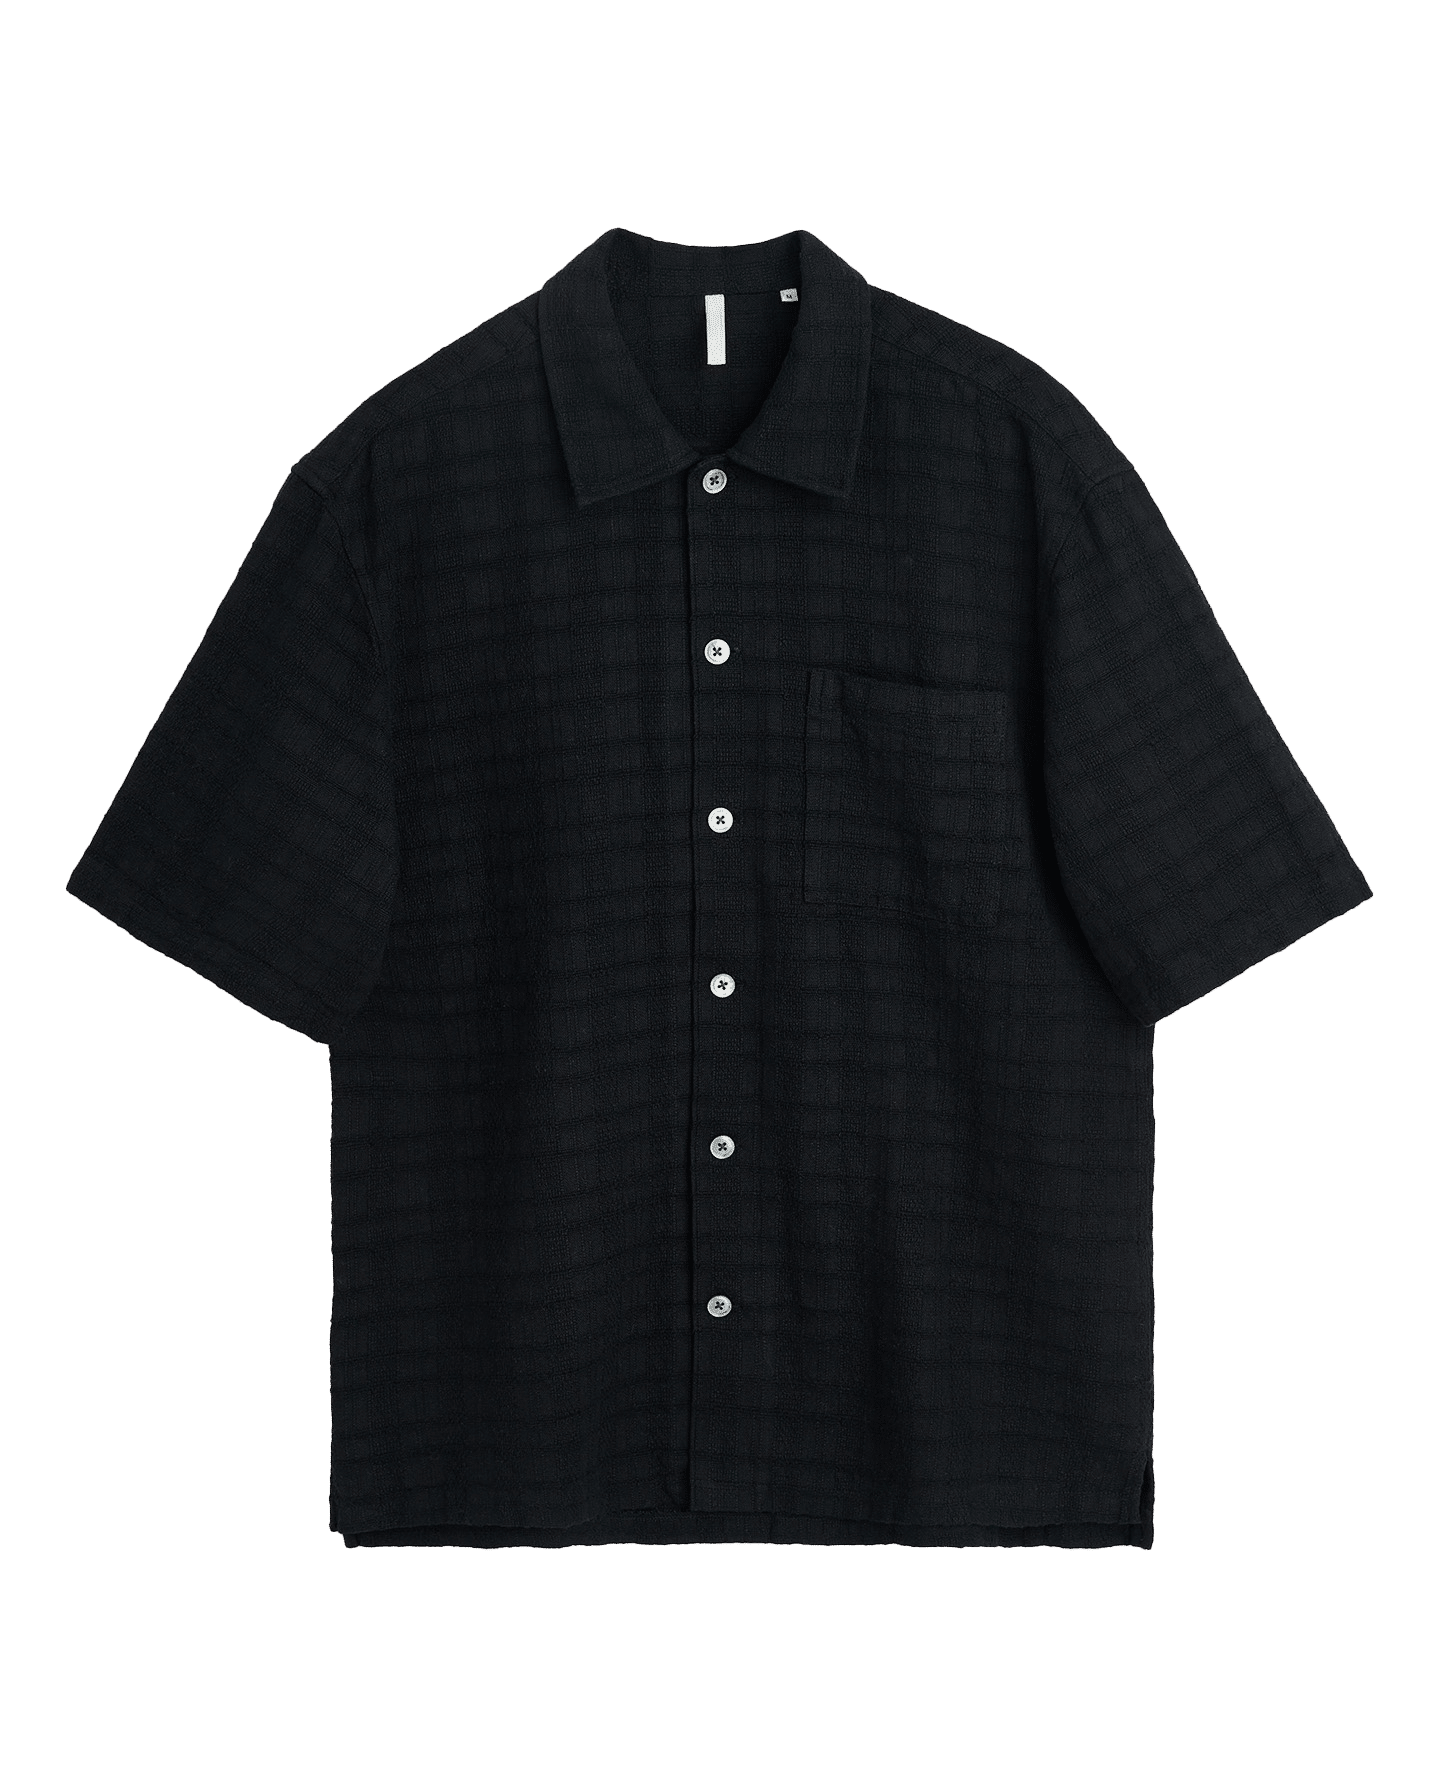 SUNFLOWER 1187 Spacey SS Shirt - Black